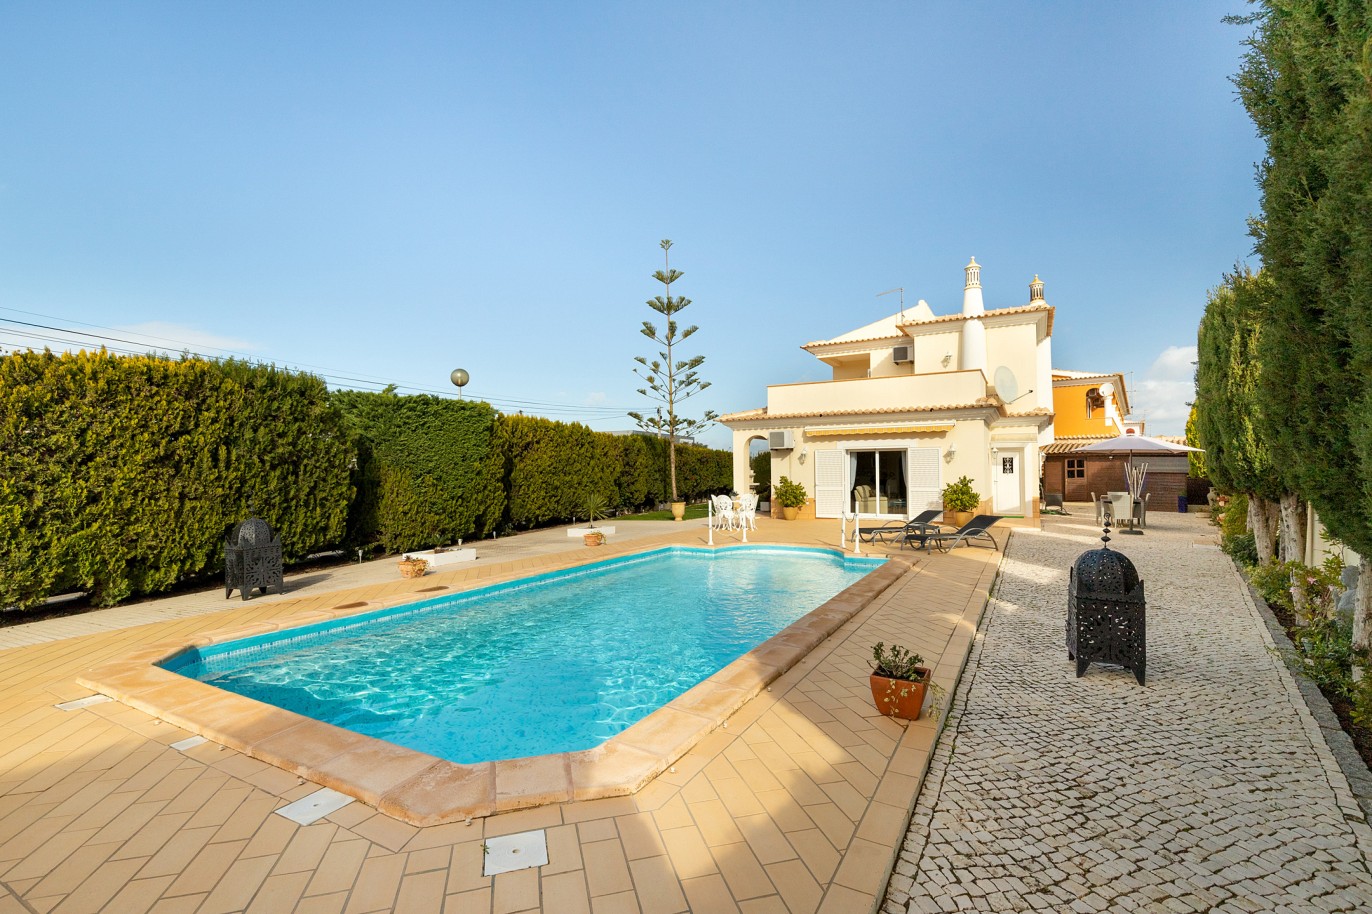 Fantastic 3 bedroom villa with pool, for sale in Algoz, Algarve_215673